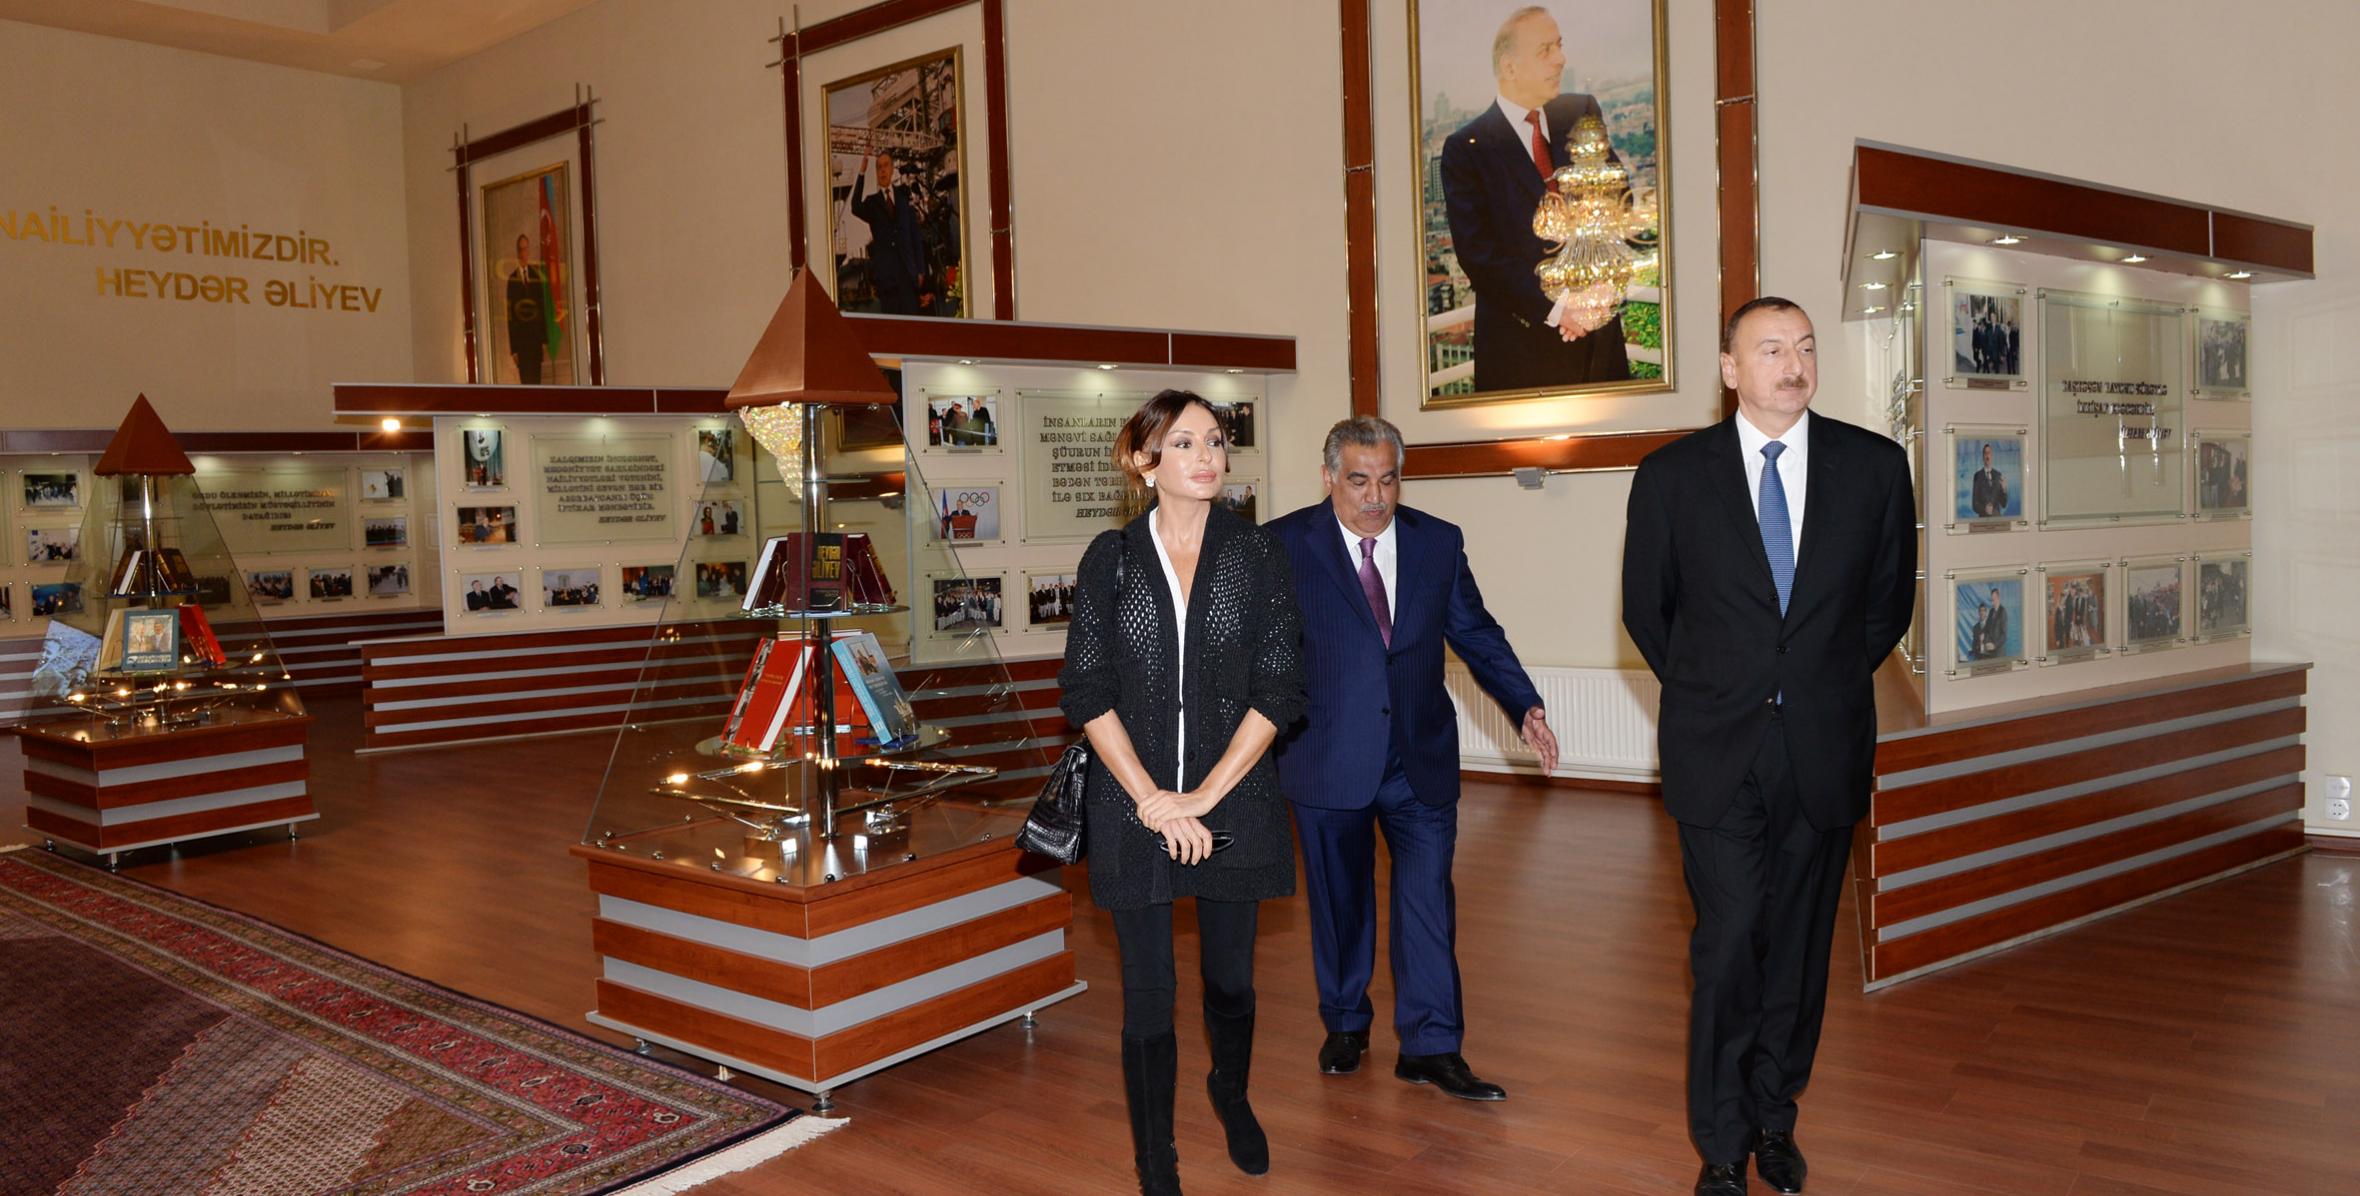 Ilham Aliyev attended the opening of the Heydar Aliyev Center in Dashkasan